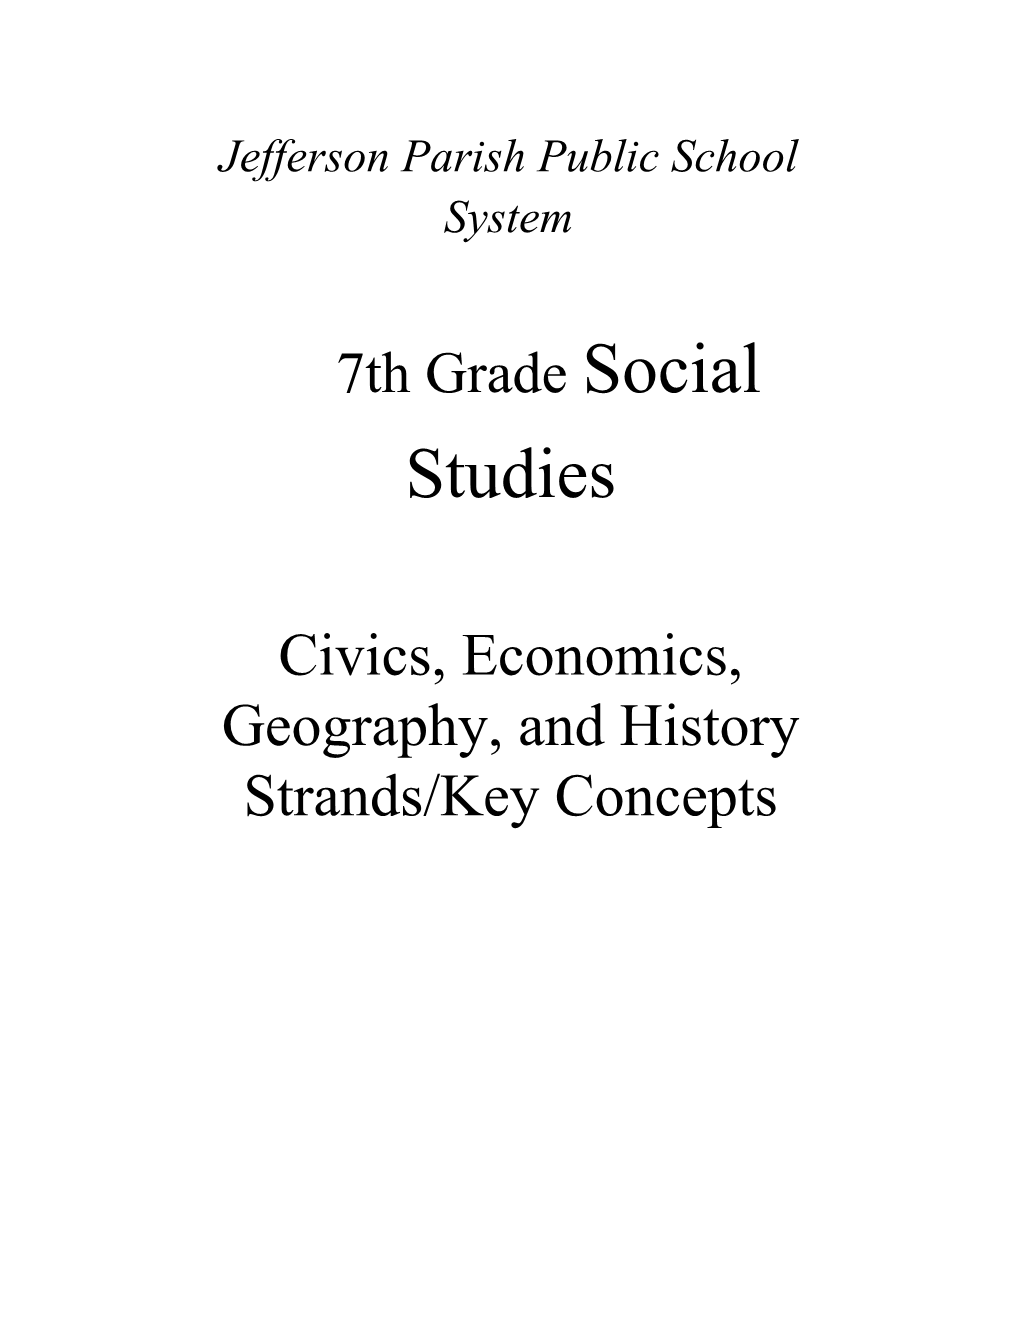 Civics, Economics, Geography, and History Strands/Key Concepts